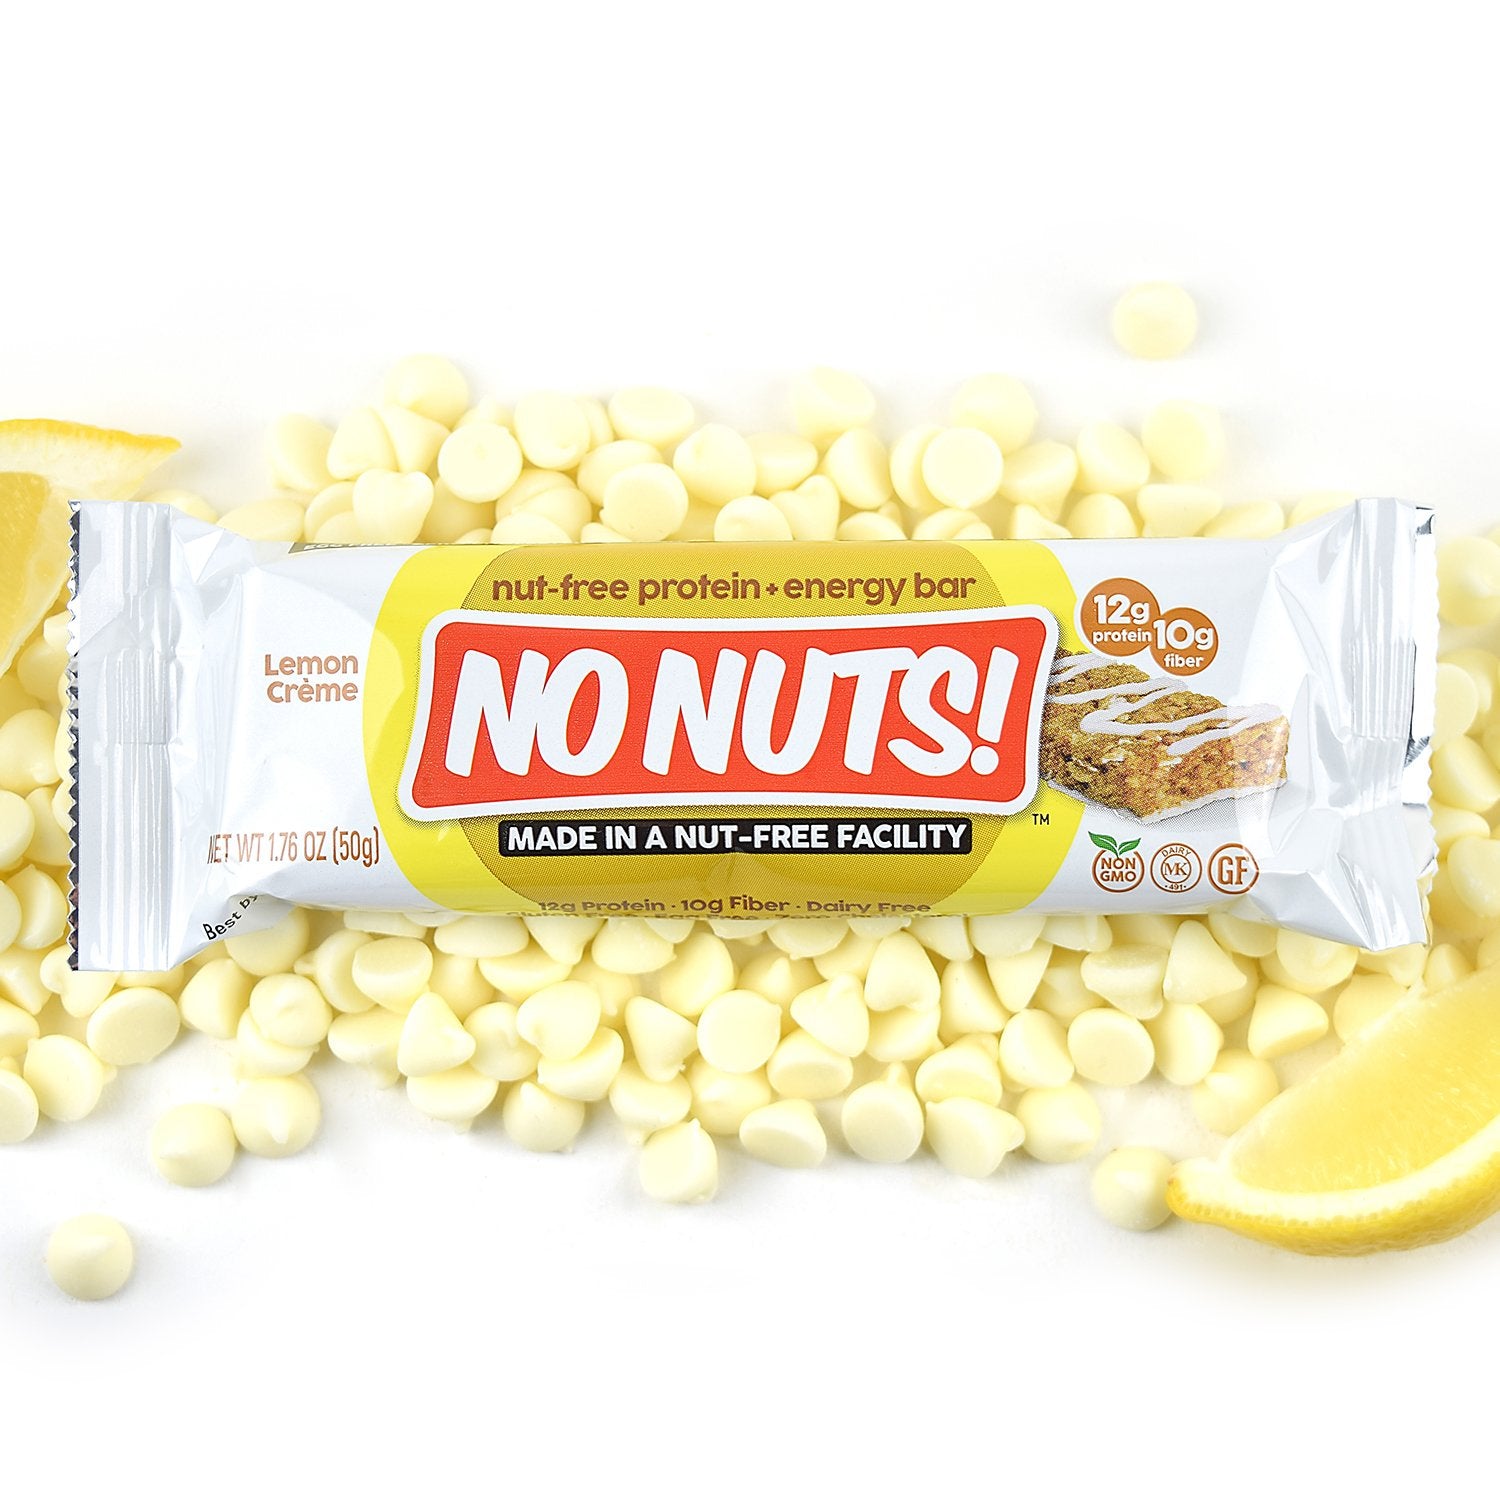 No Nuts! Lemon Creme Protein Bar